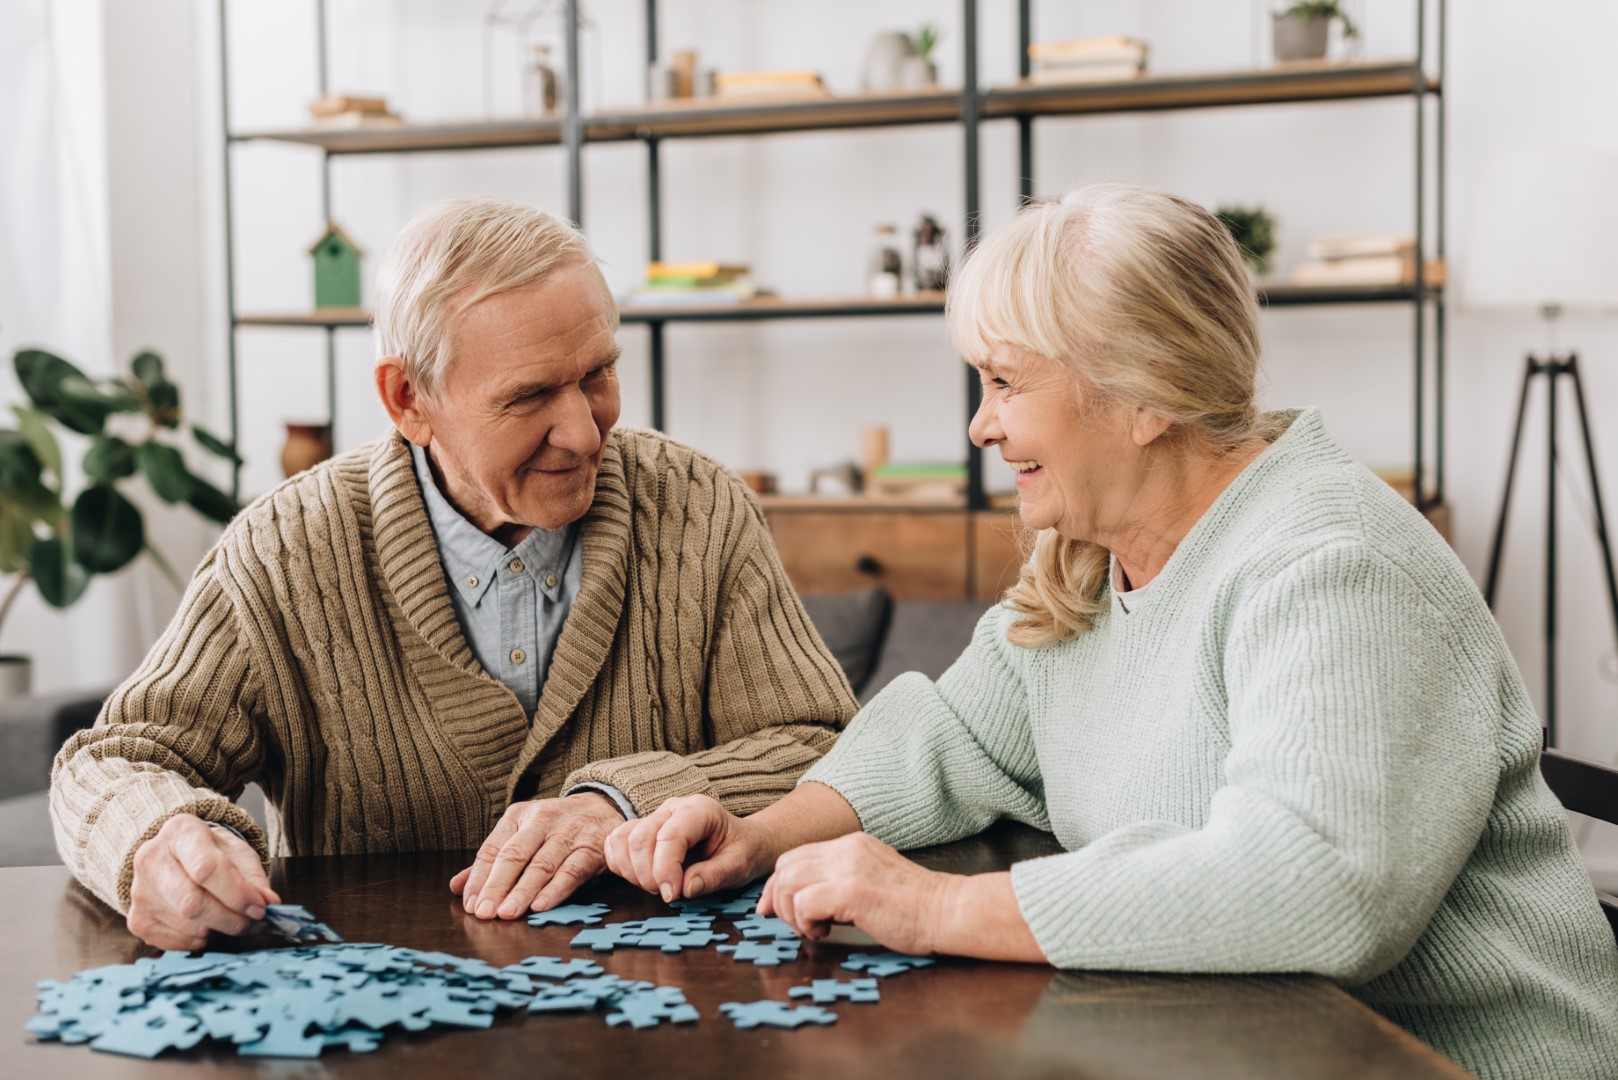 5 ways to stimulate brain activity for seniors